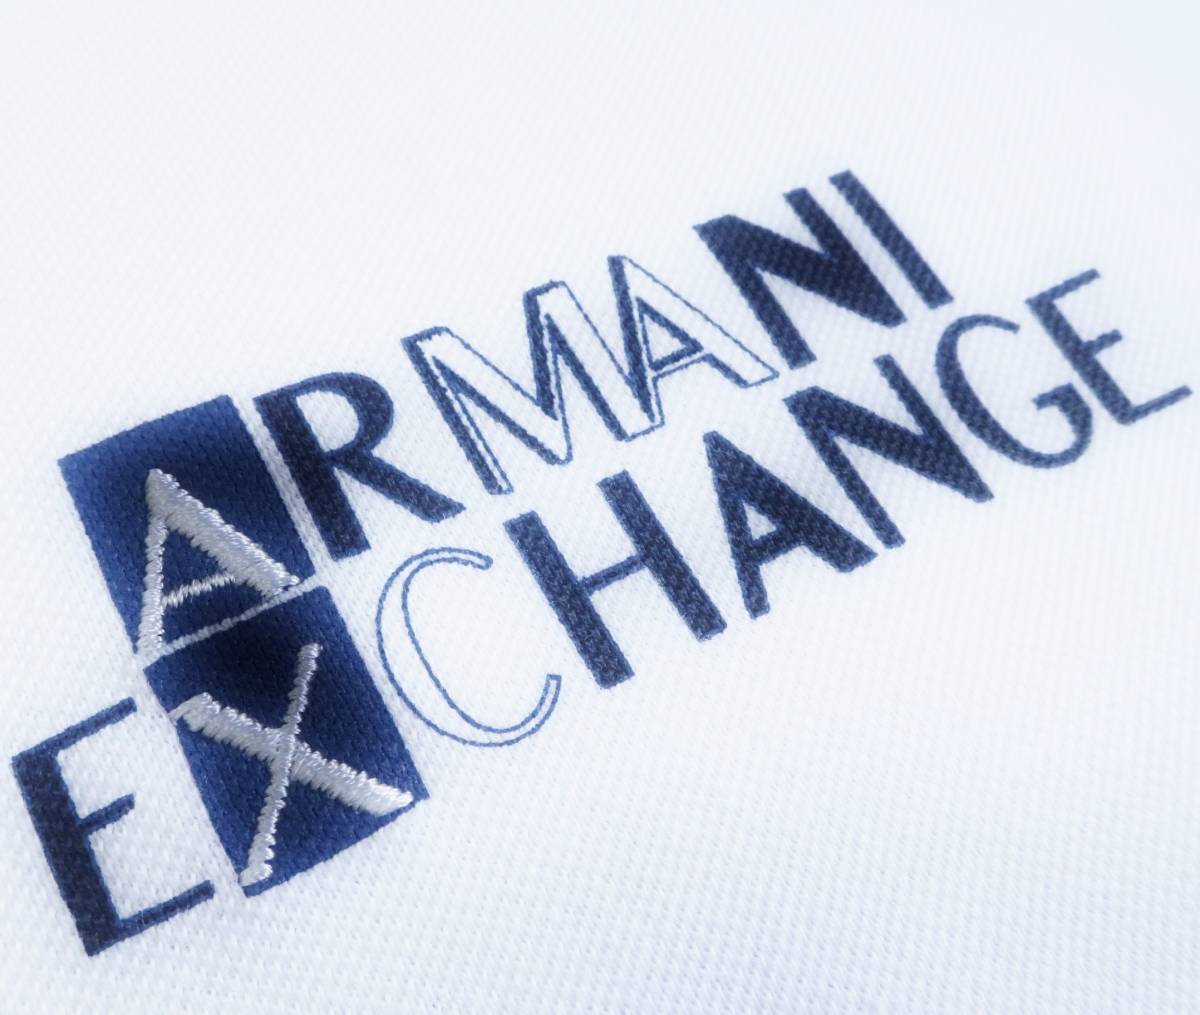  новый товар * Armani * органический белый рубашка-поло * темно-синий Logo * короткий рукав вязаный рубашка * Турция производства белый XL*AX ARMANI*193